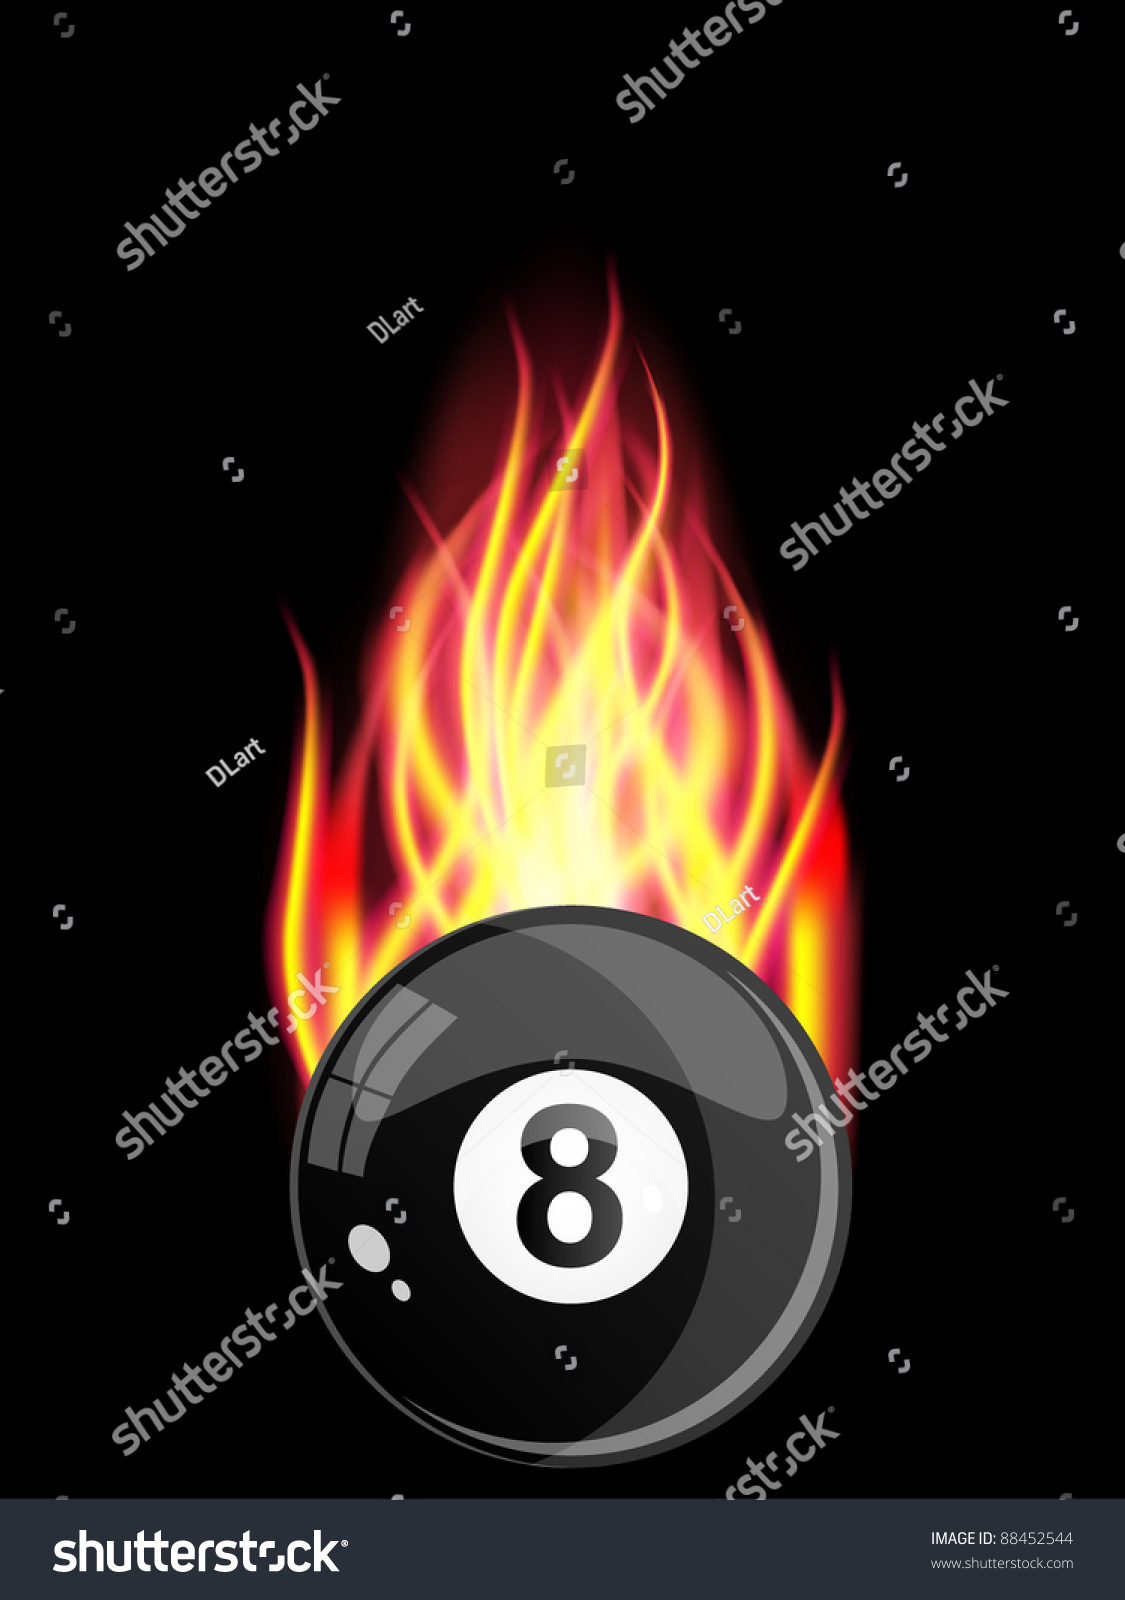 Pool Billiards Ball In Fire. Vector Illustration. - 88452544 : Shutterstock